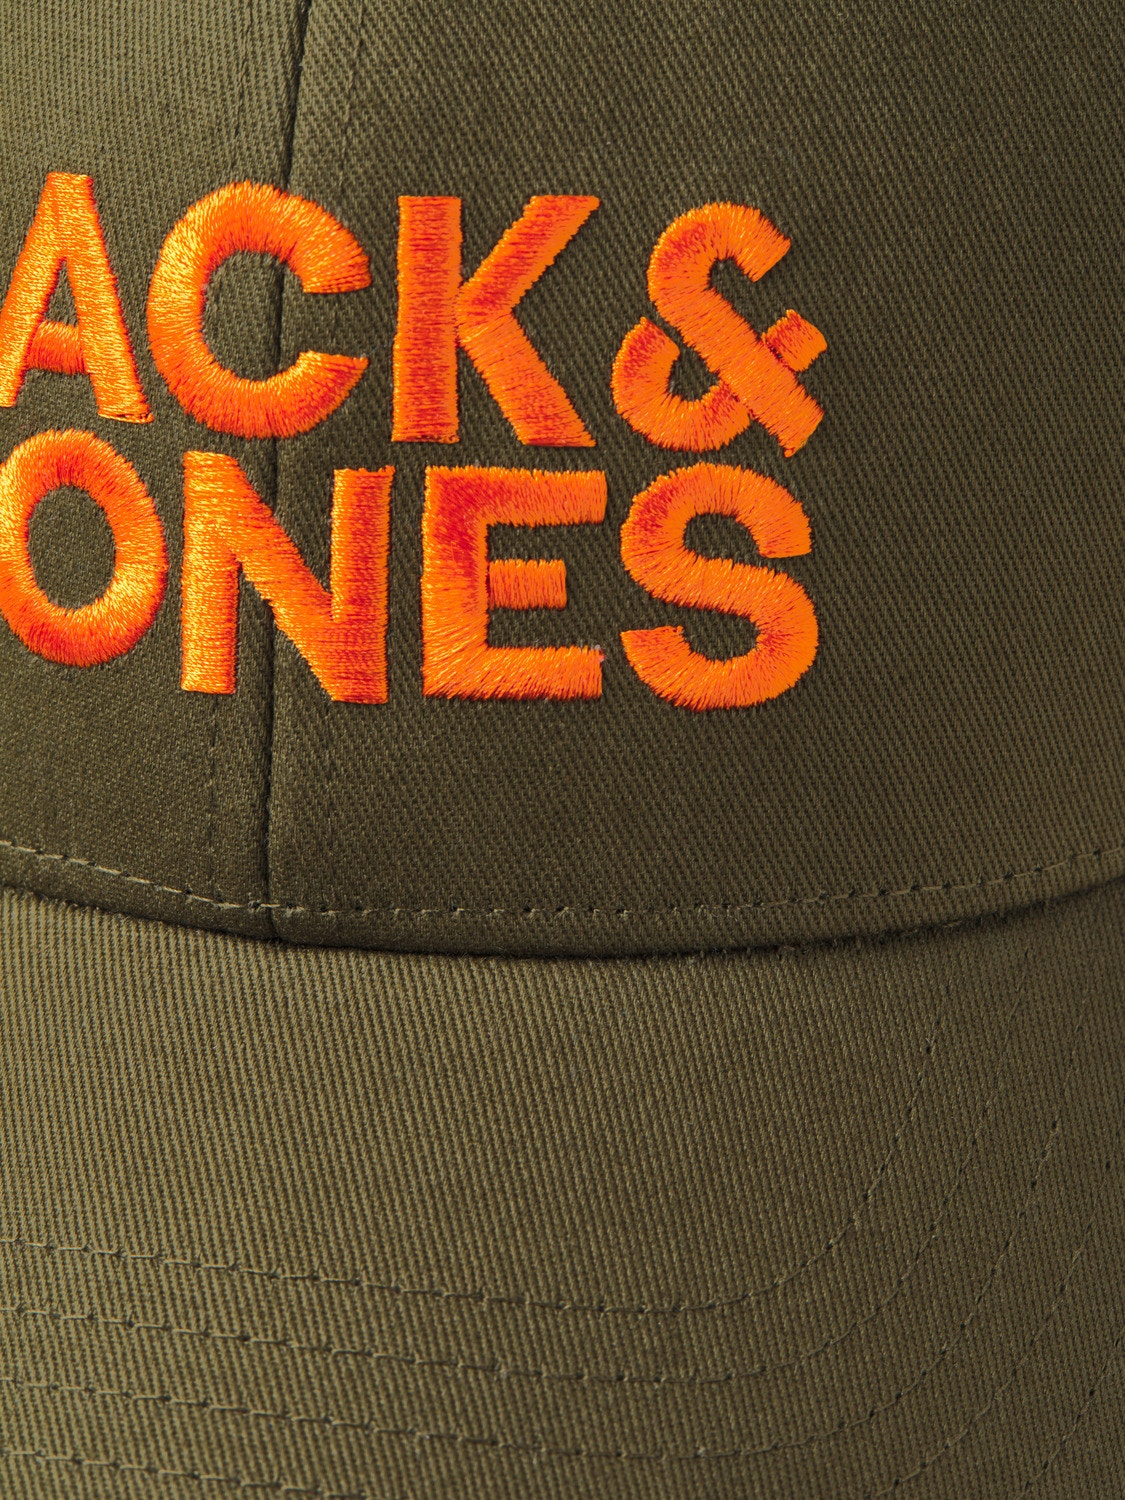 Jack & Jones Baseball cap -Olive Night - 12254296